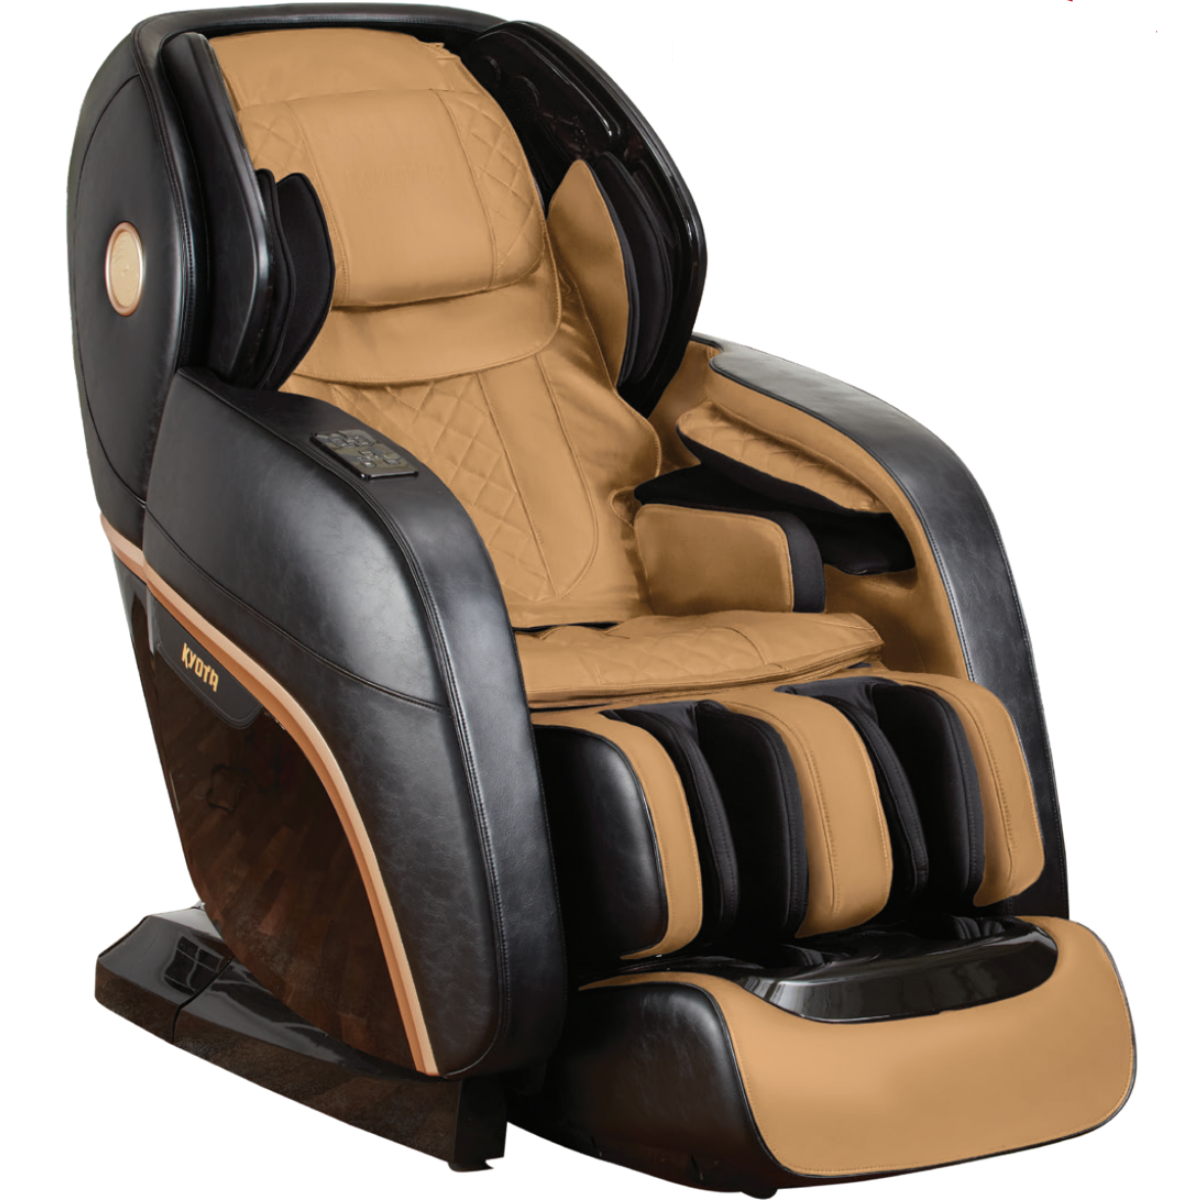 Kyota Kokoro 4D Massage Chair M888 in Brown - Home Bars USA